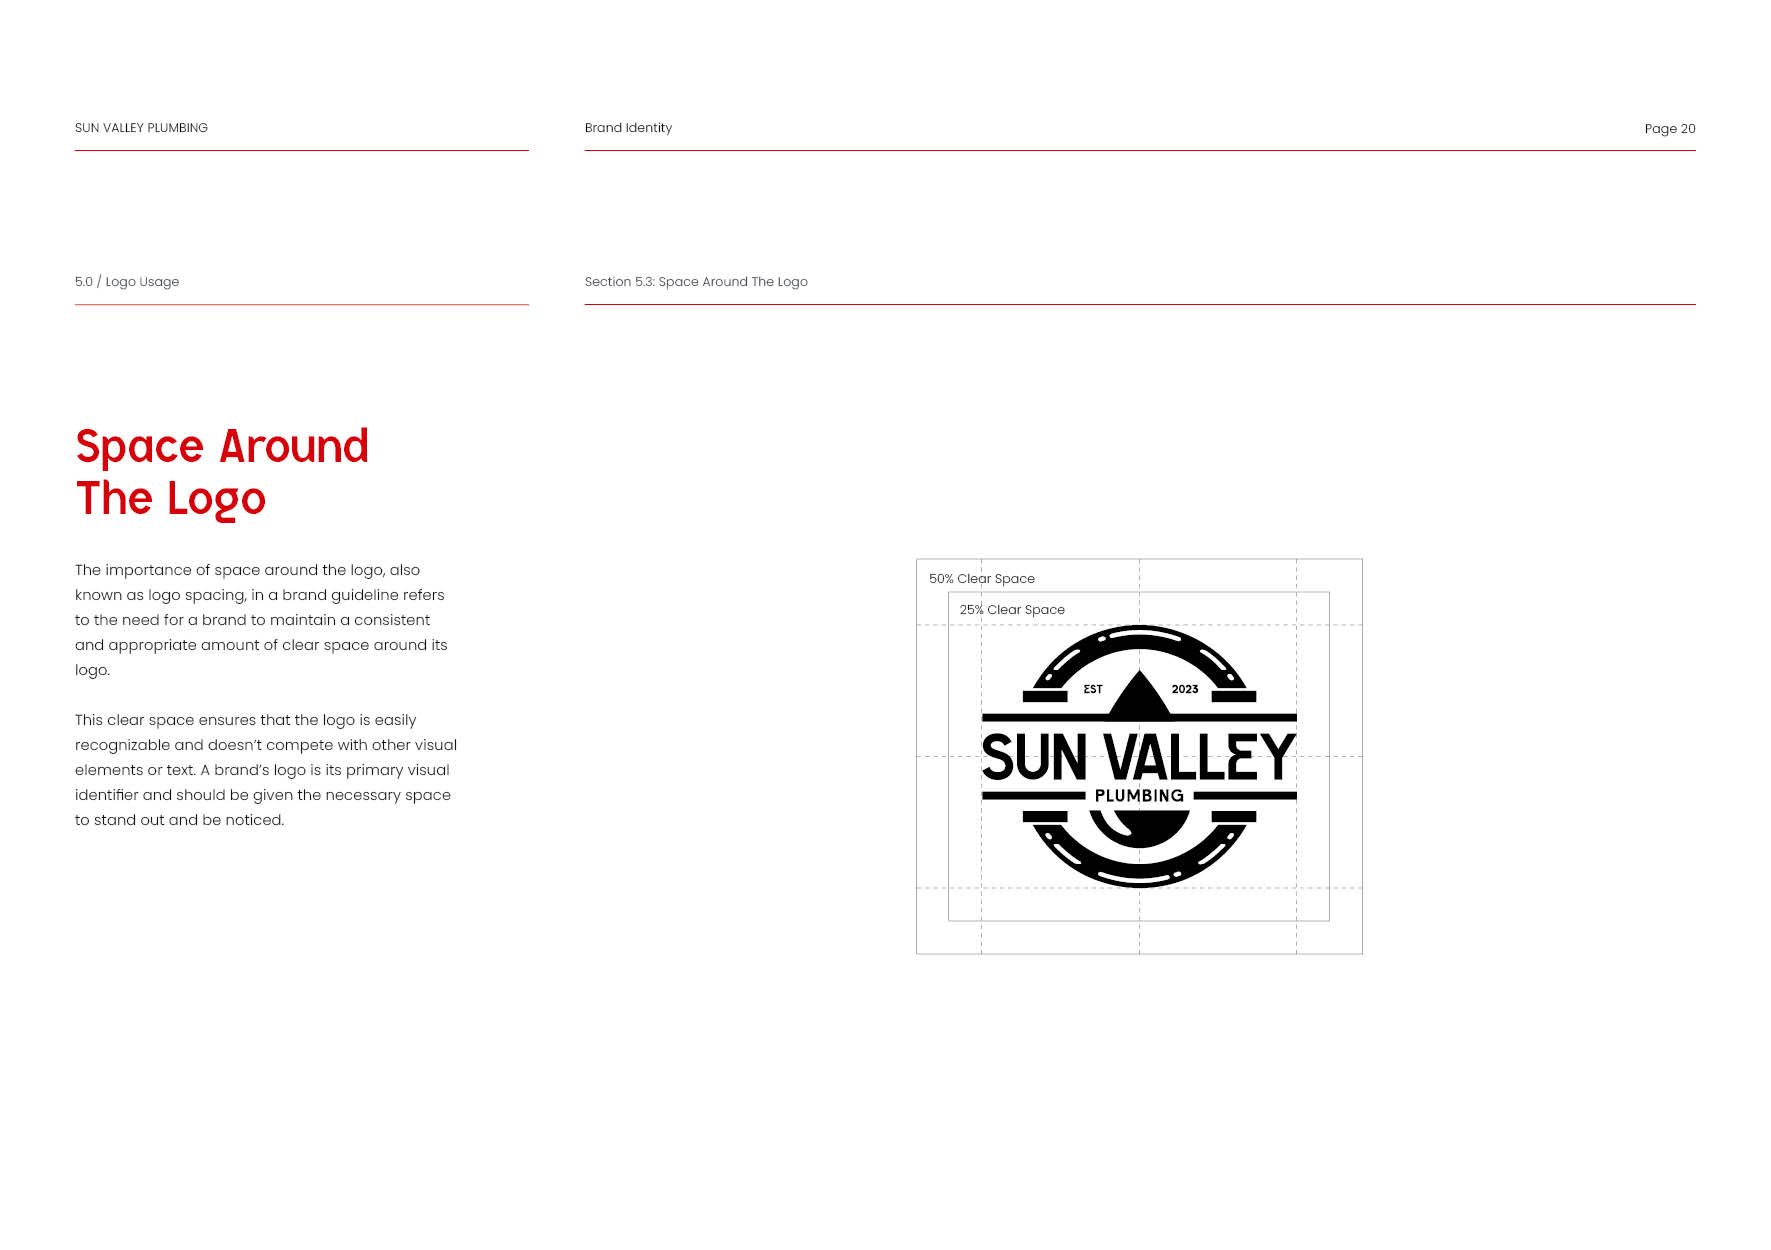 Sun Valley Plumbing - Brand Identity20.jpg